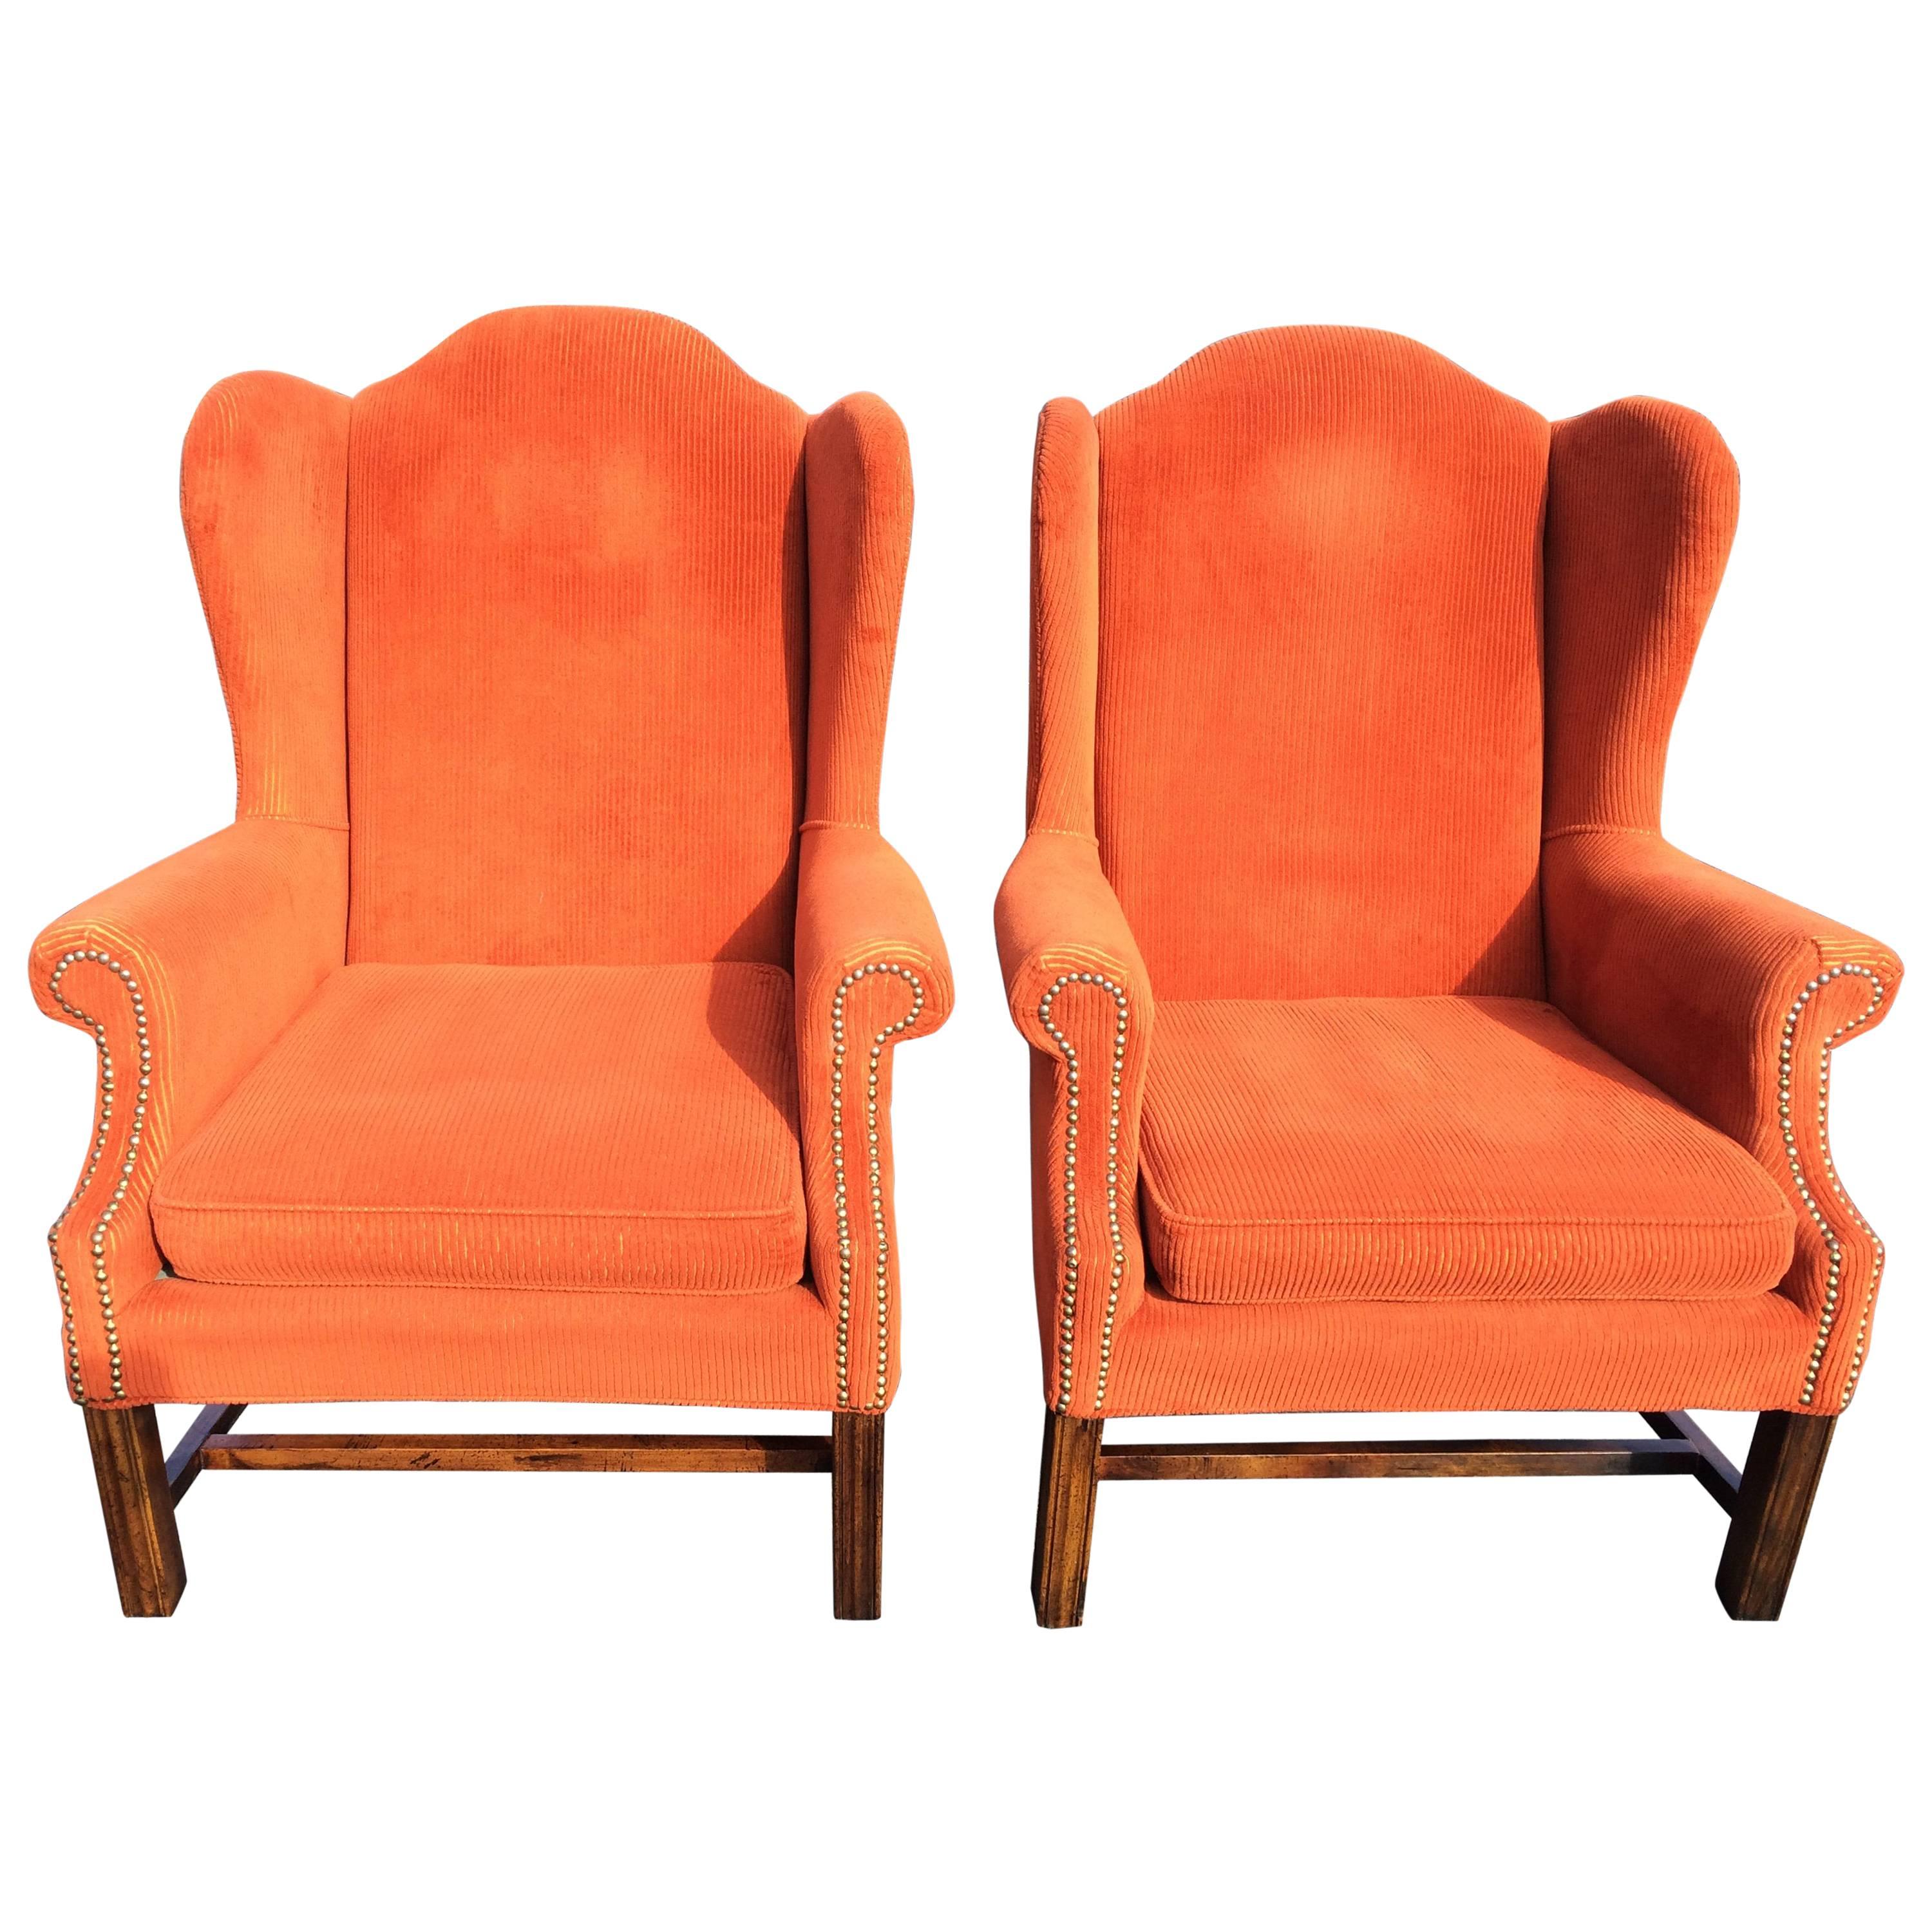 Pair of Orange Corduroy Wing Back Chairs